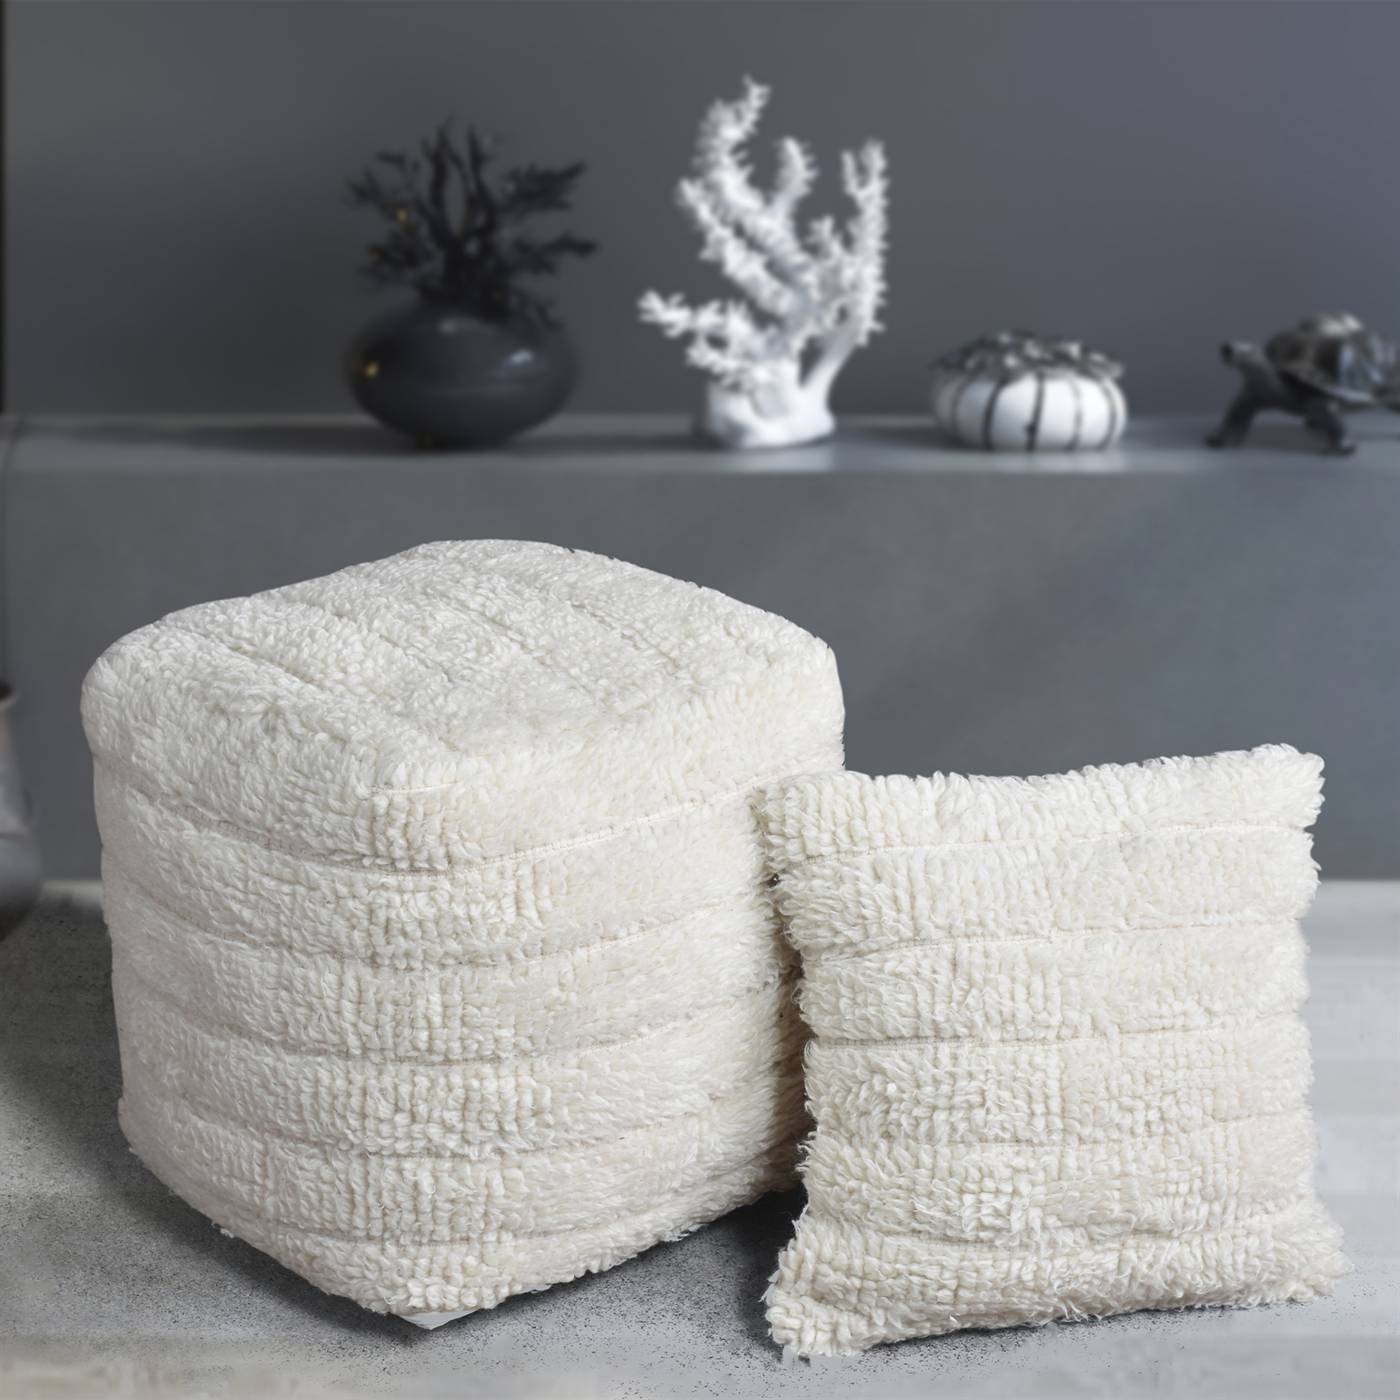 Lumot Cushion, 45x45 cm, Natural White, NZ Wool, Hand Woven, Handwoven, All Cut 